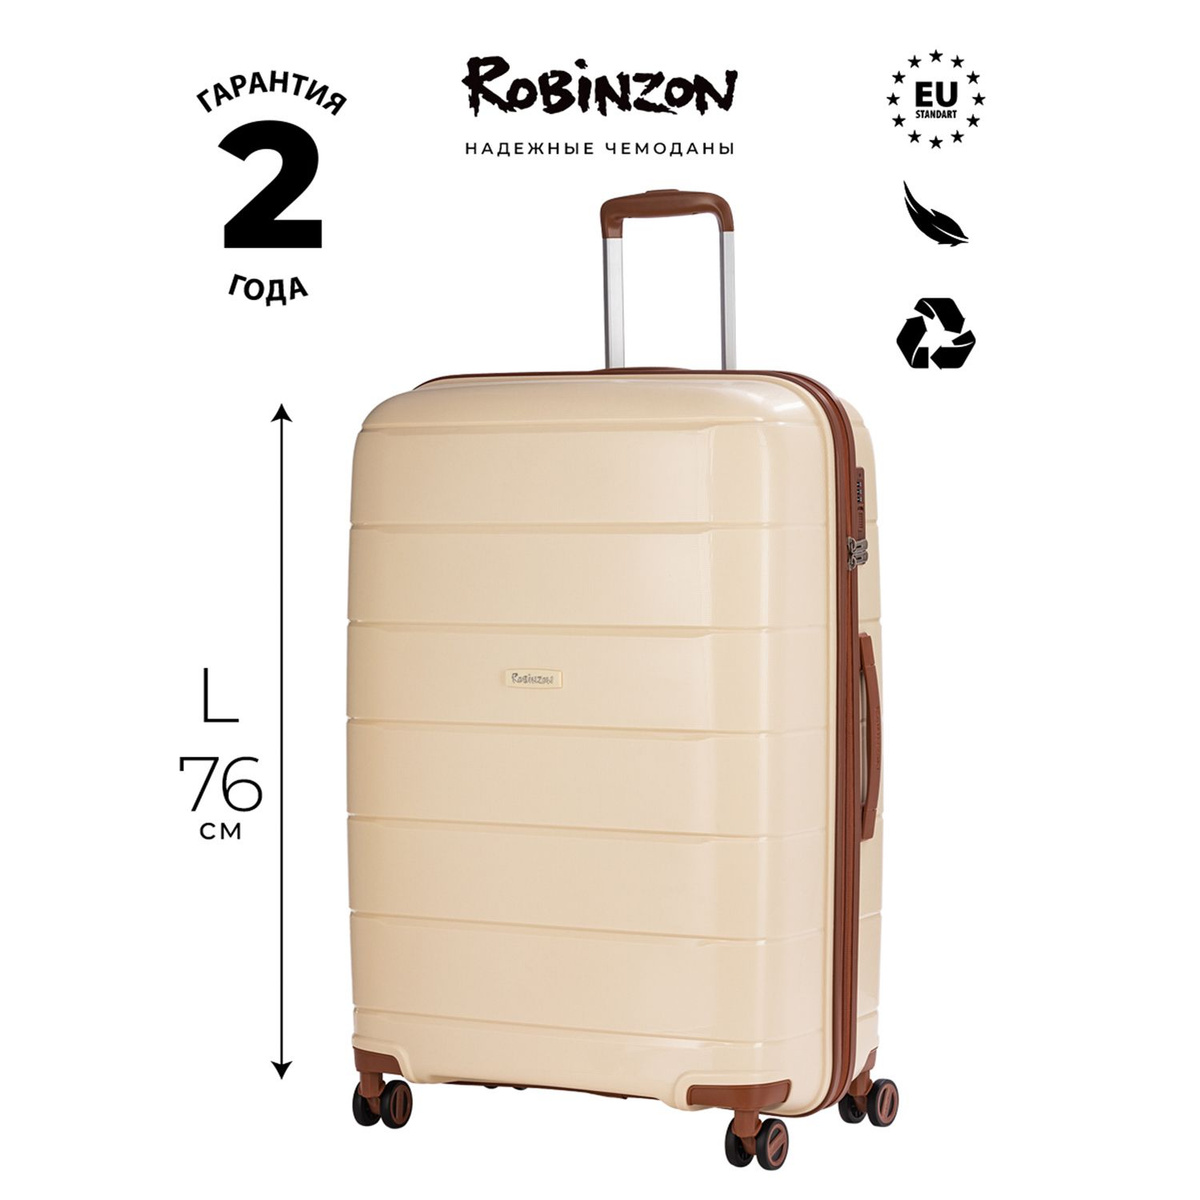 Габариты чемодана: 52x76x29 см Вес чемодана: 4,5 кг Объём чемодана: 98 л